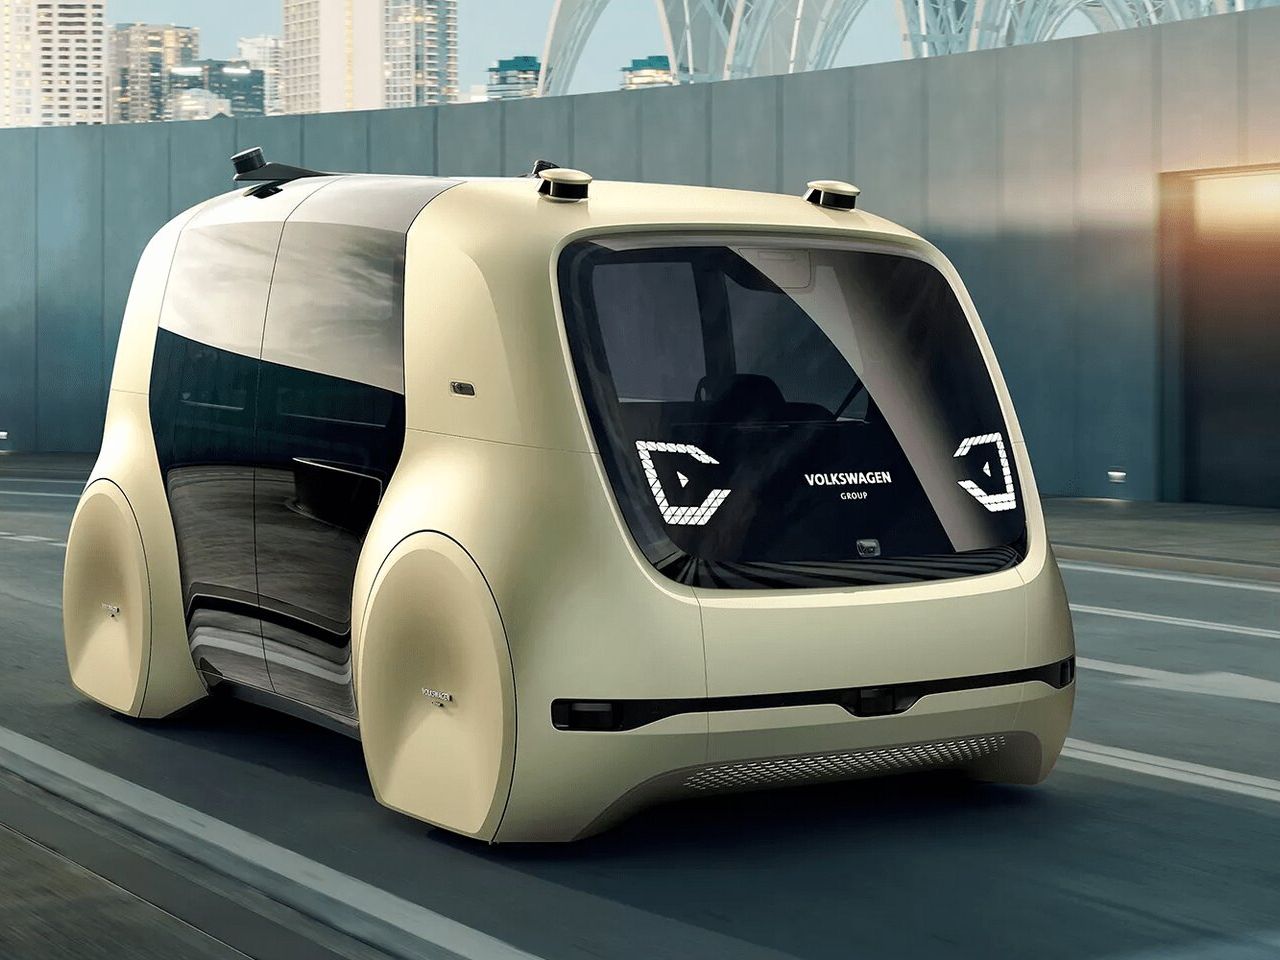 Volkswagen Concept Cars SEDRIC zu autonomen Fahren